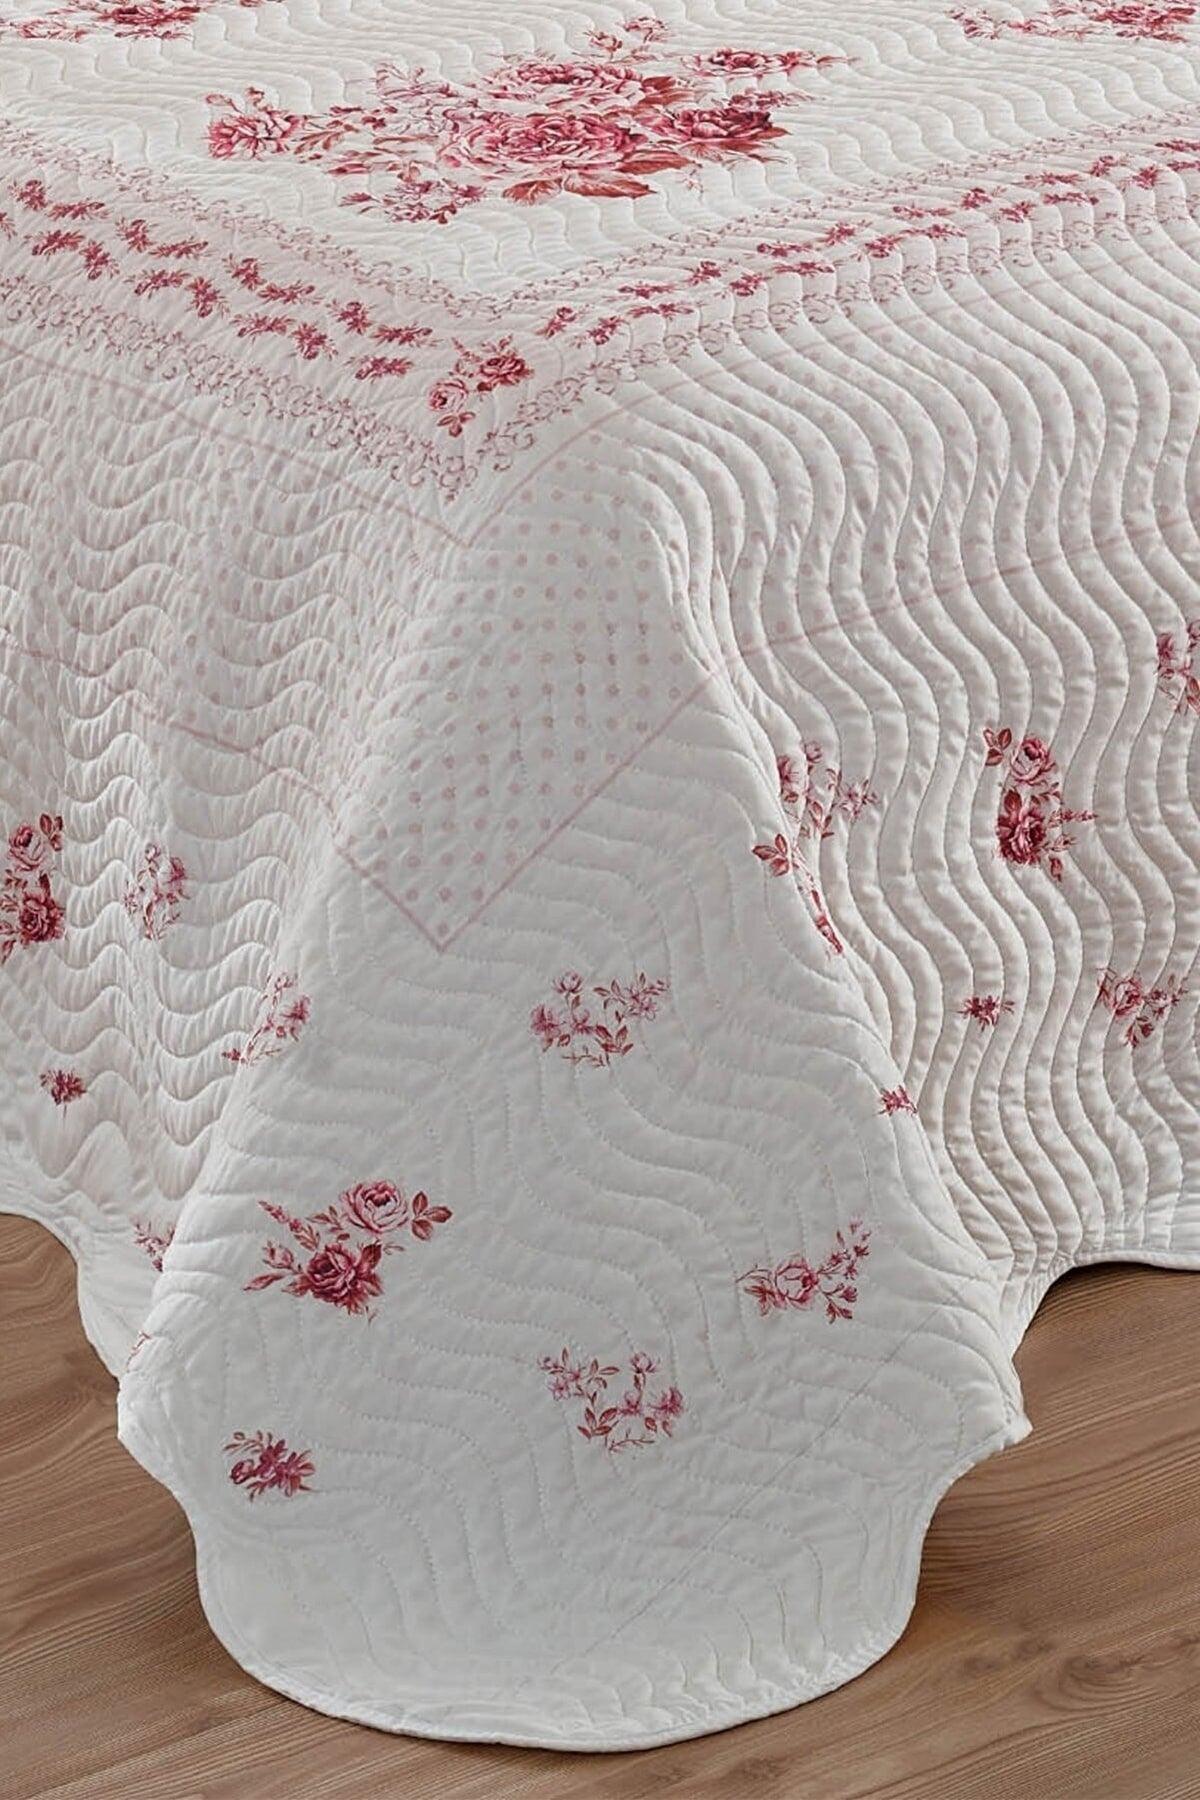 Flower Pink Double Quilted Bedspread Yöçk14 - Swordslife